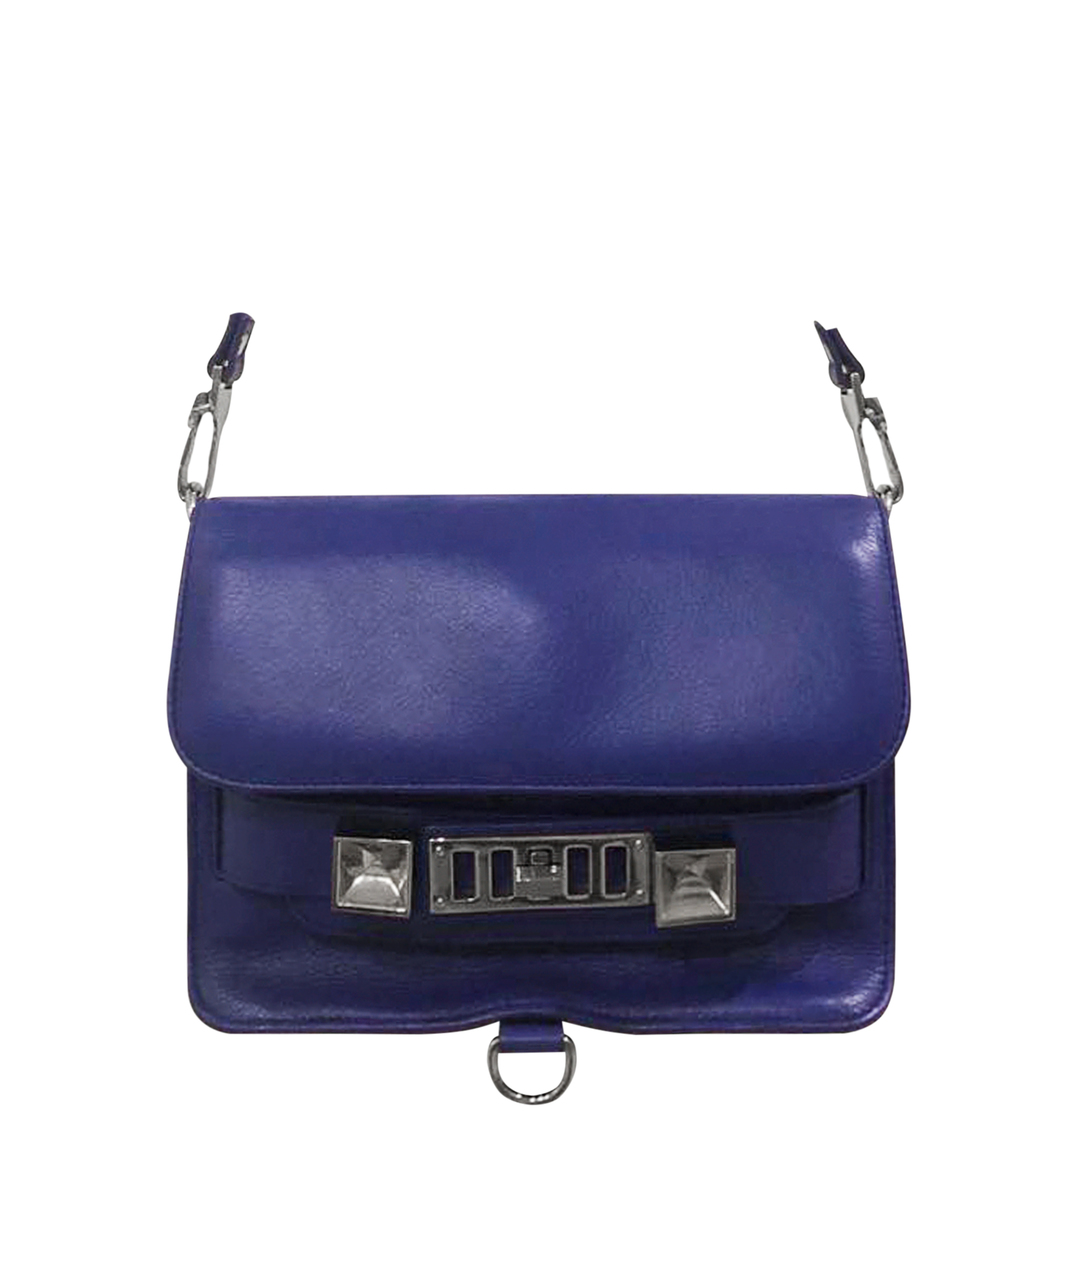 PROENZA SCHOULER Фиолетовая кожаная сумка через плечо, фото 1